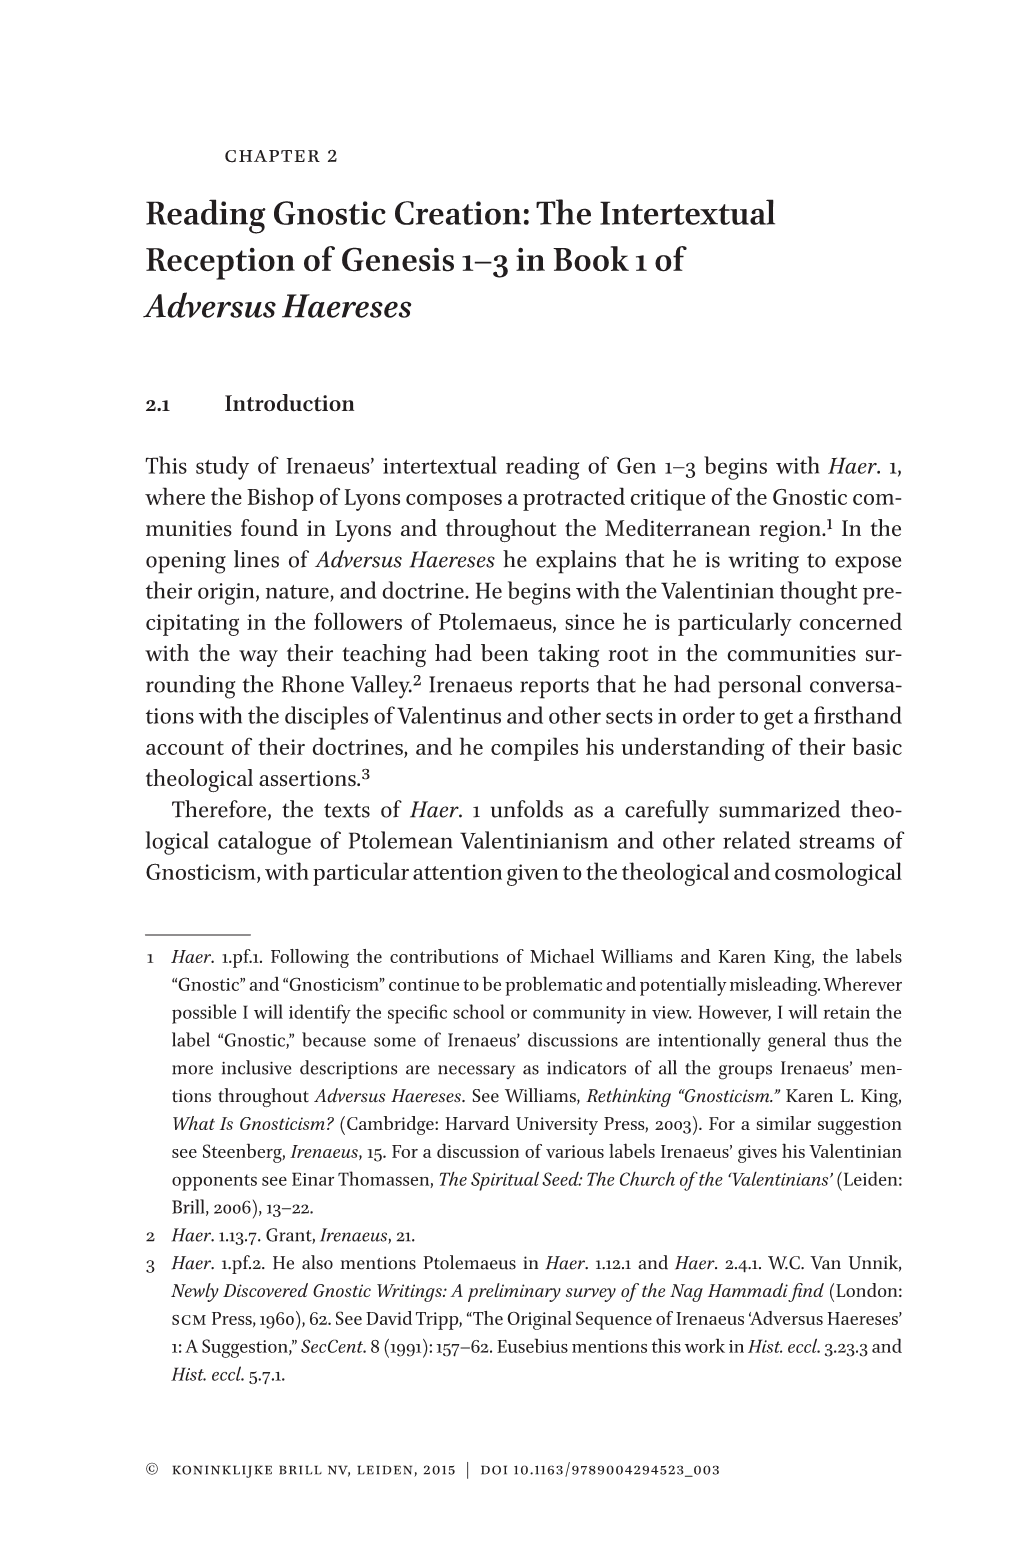 Reading Gnostic Creation: the Intertextual Reception of Genesis 1–3 in Book 1 of Adversus Haereses